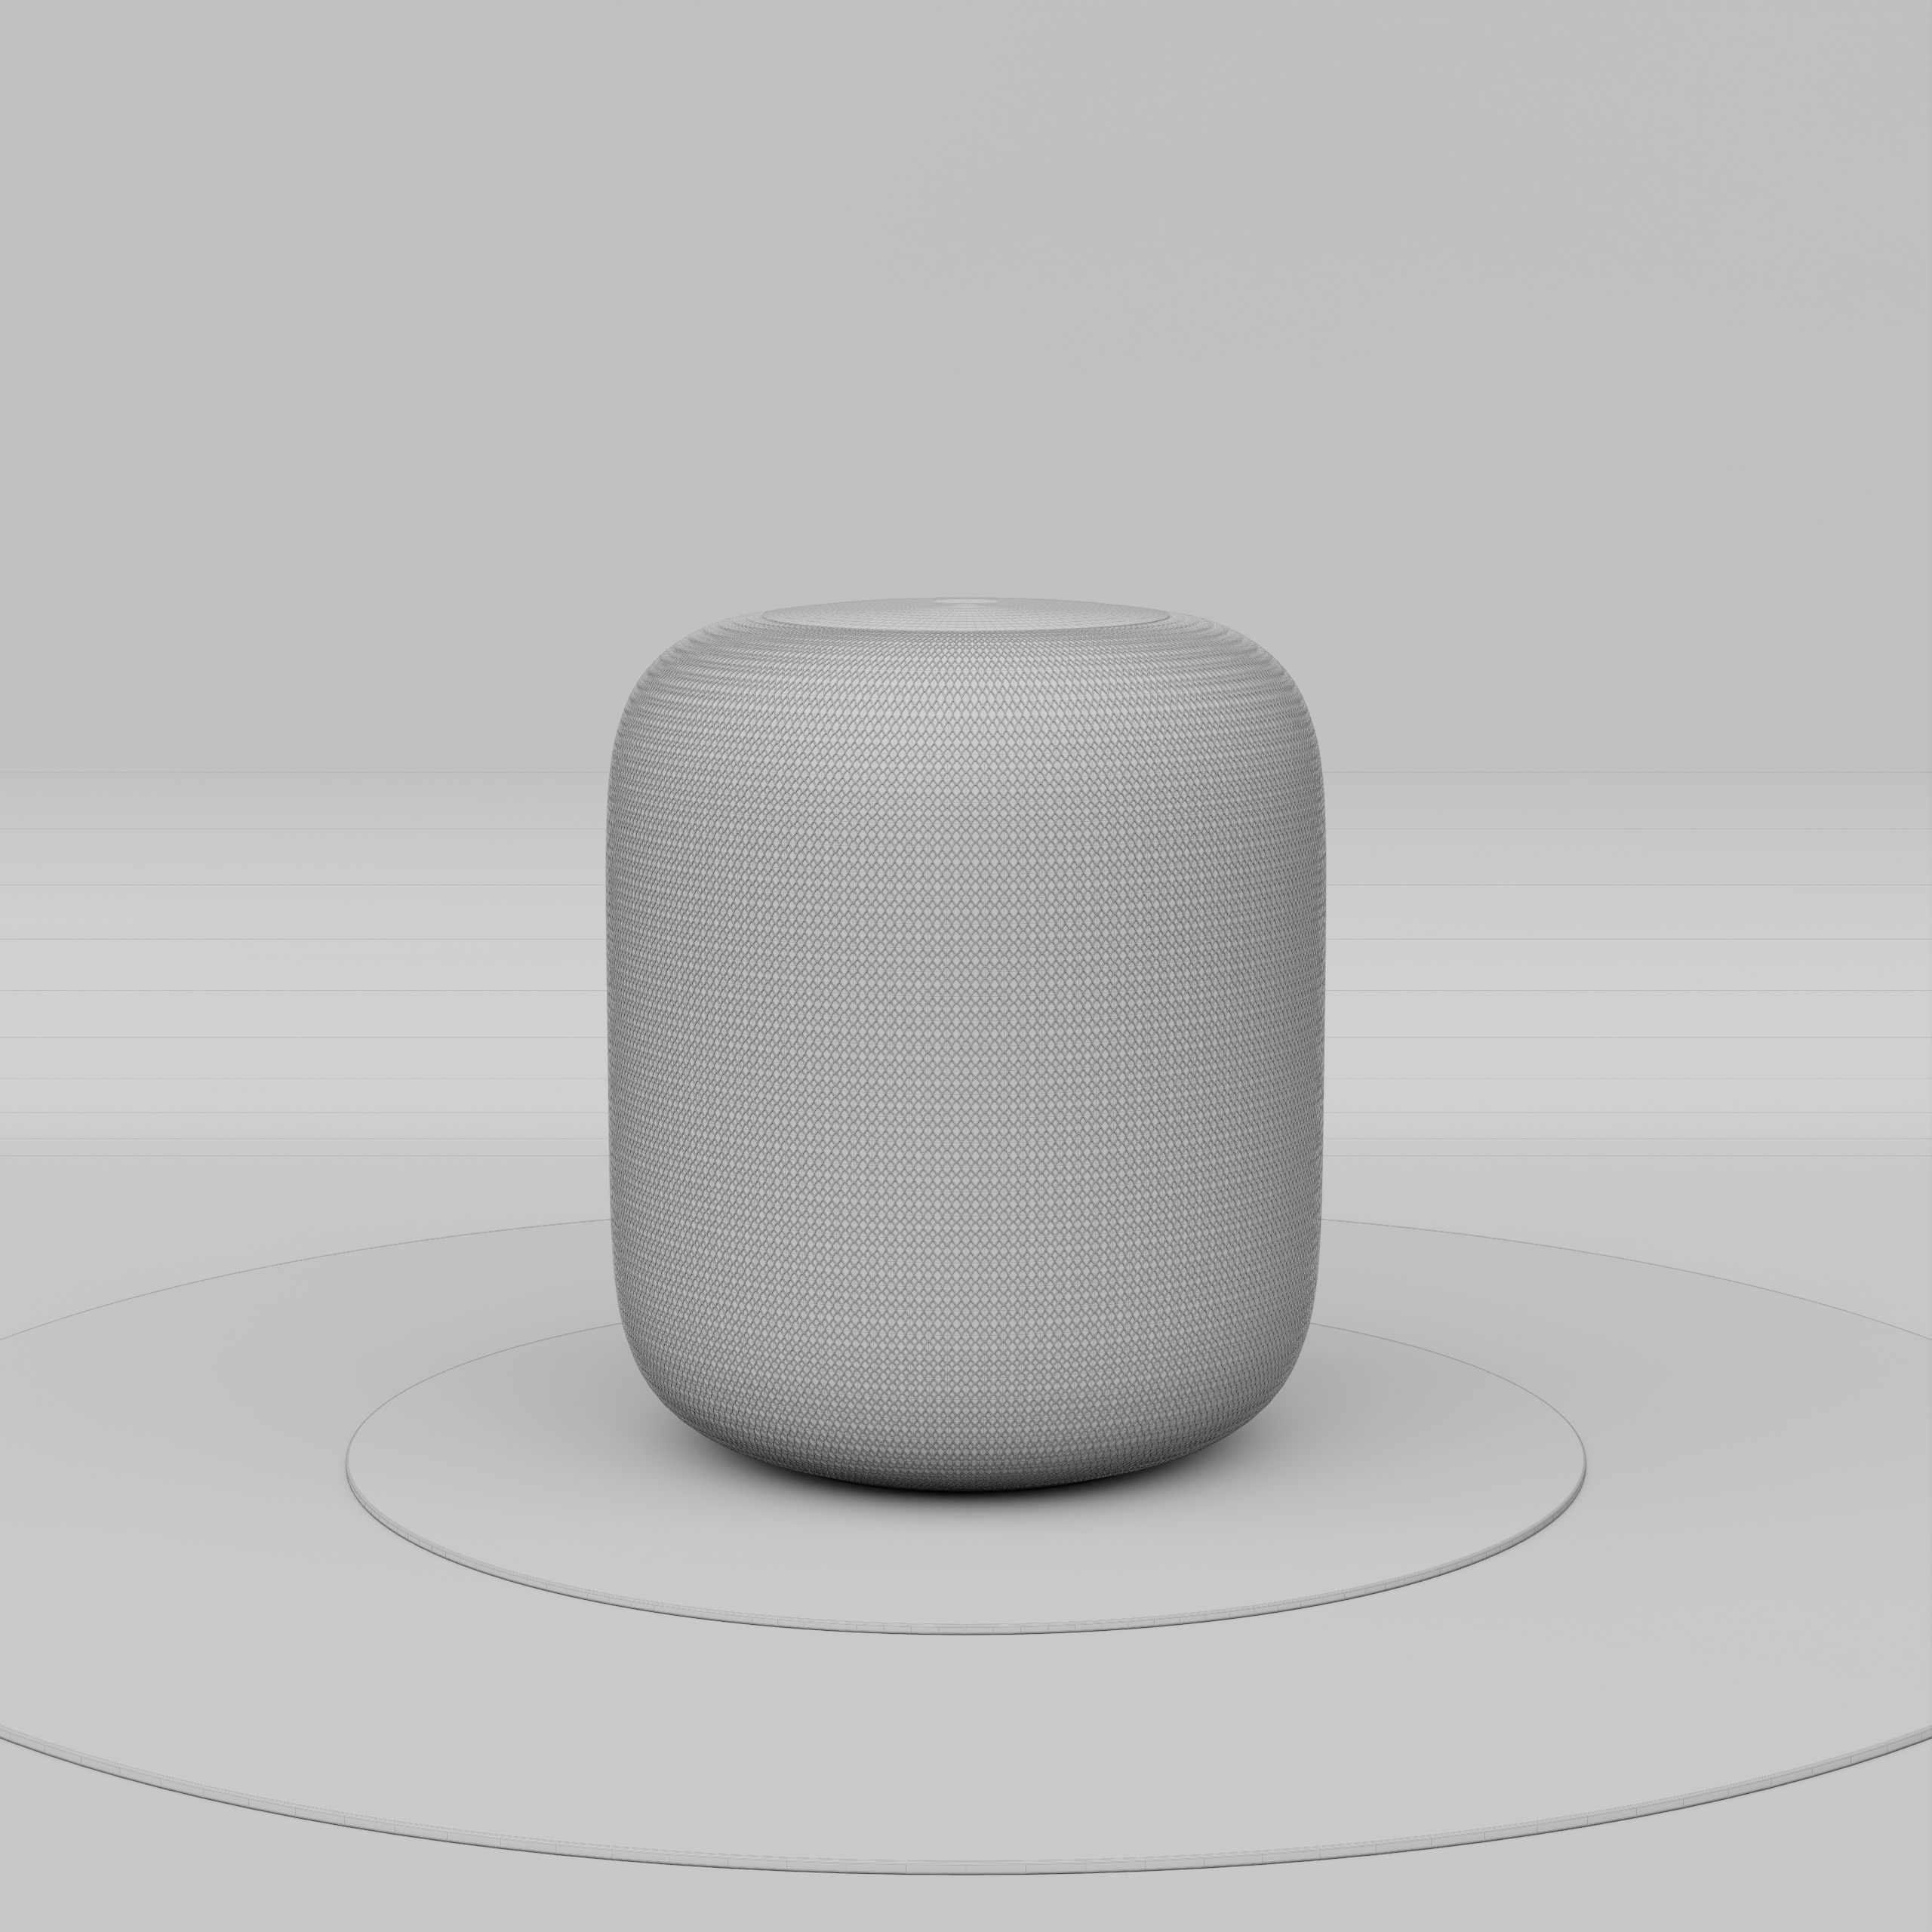 18 Homepod Wireframes V1 - Apple HomePod CGI - Sonny Nguyen